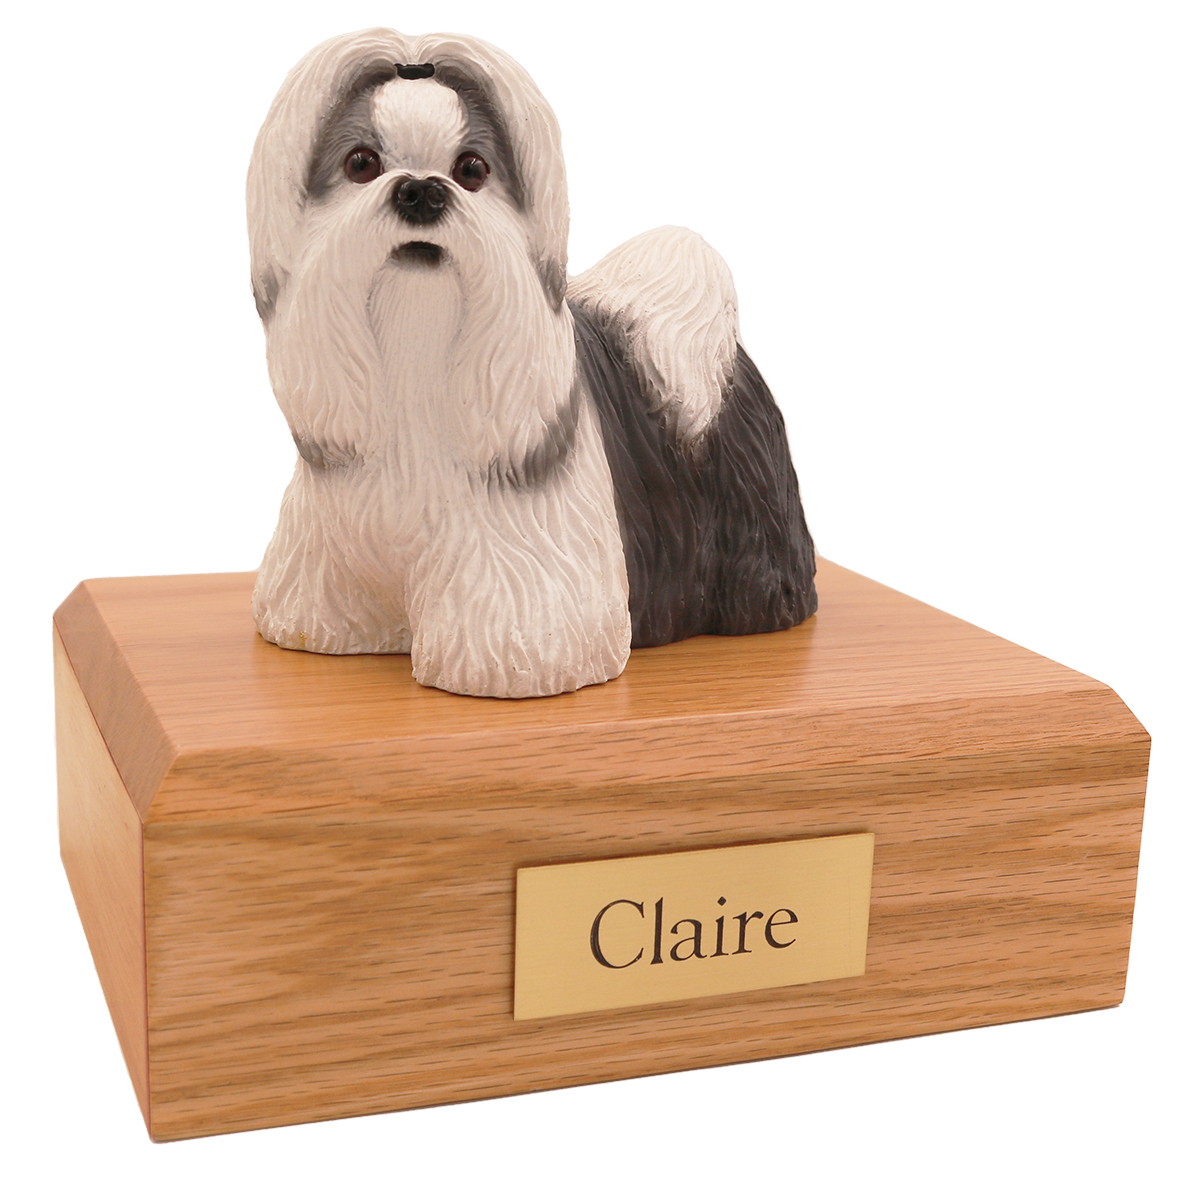 Dog, Shih Tzu, Gray/White - Figurine Urn